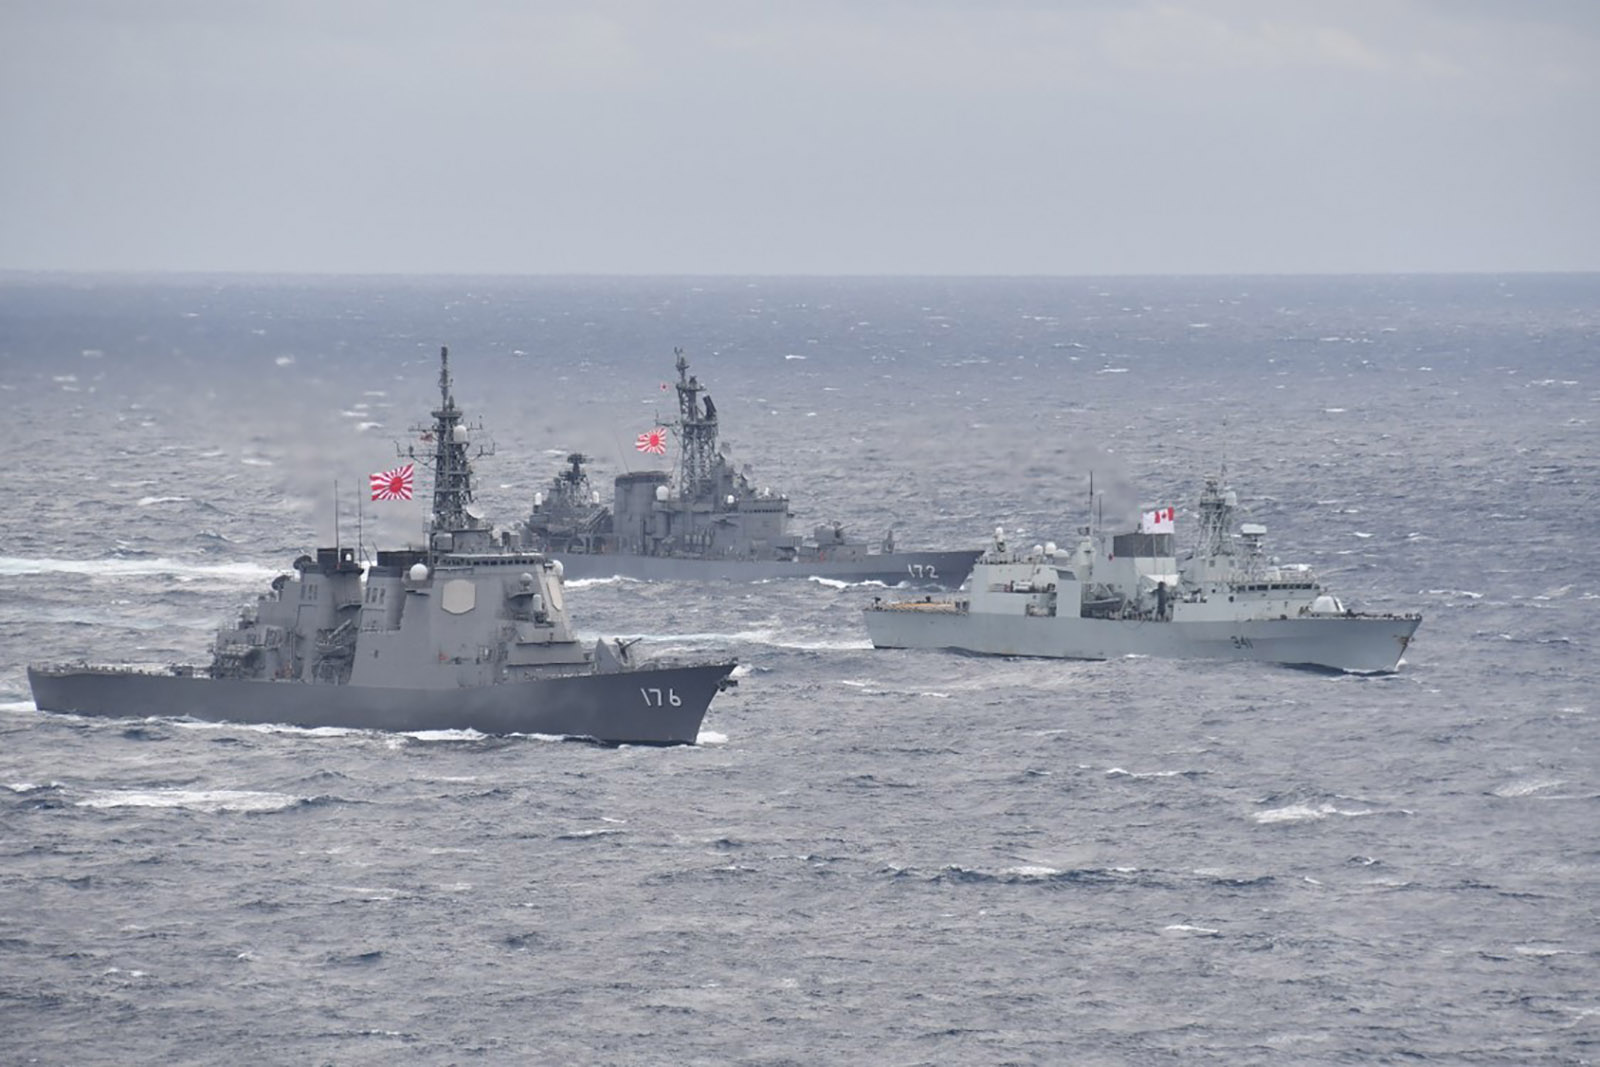 HMCS Ottawa, JMSDF Chokai and Shimakaze 